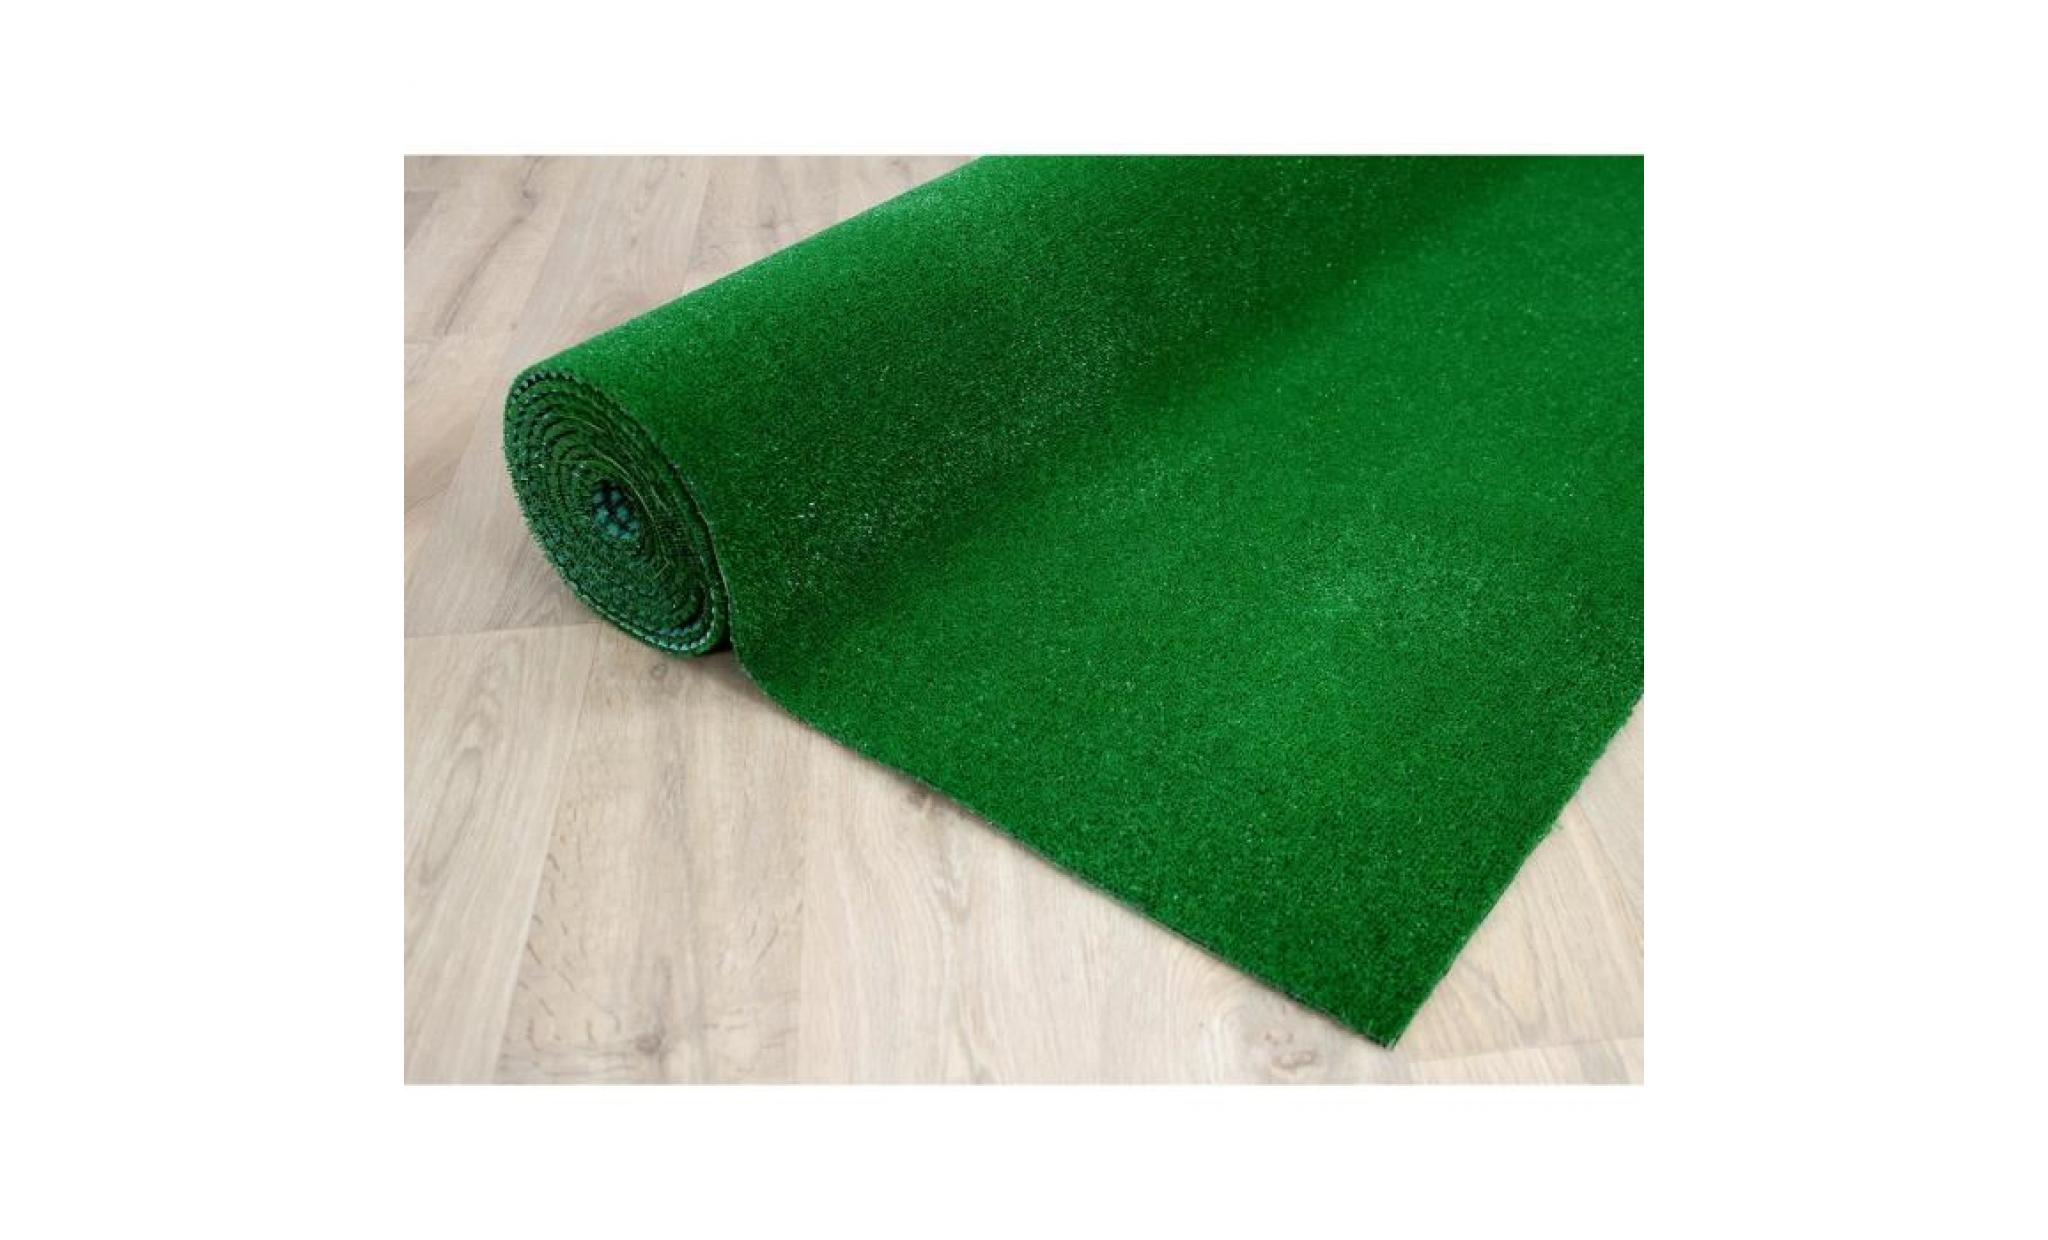 york   tapis type gazon artificiel avec nubs – pour jardin, terrasse, balcon   vert   [200x500 cm]